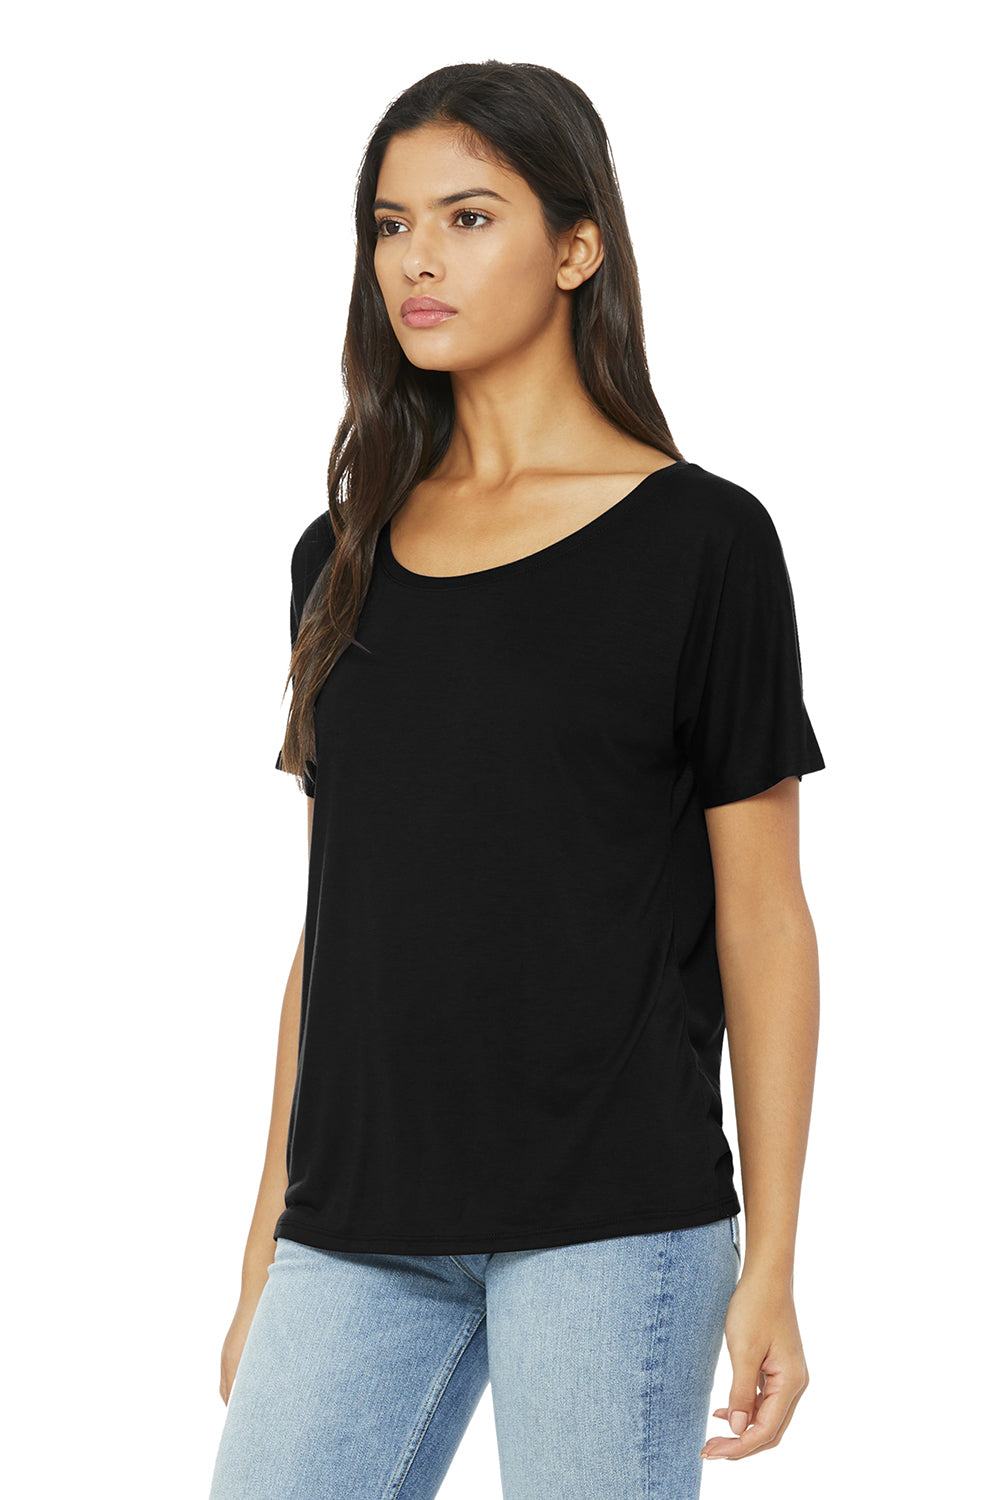 Bella + Canvas BC8816/8816 Womens Slouchy Short Sleeve Wide Neck T-Shirt Black Model 3Q